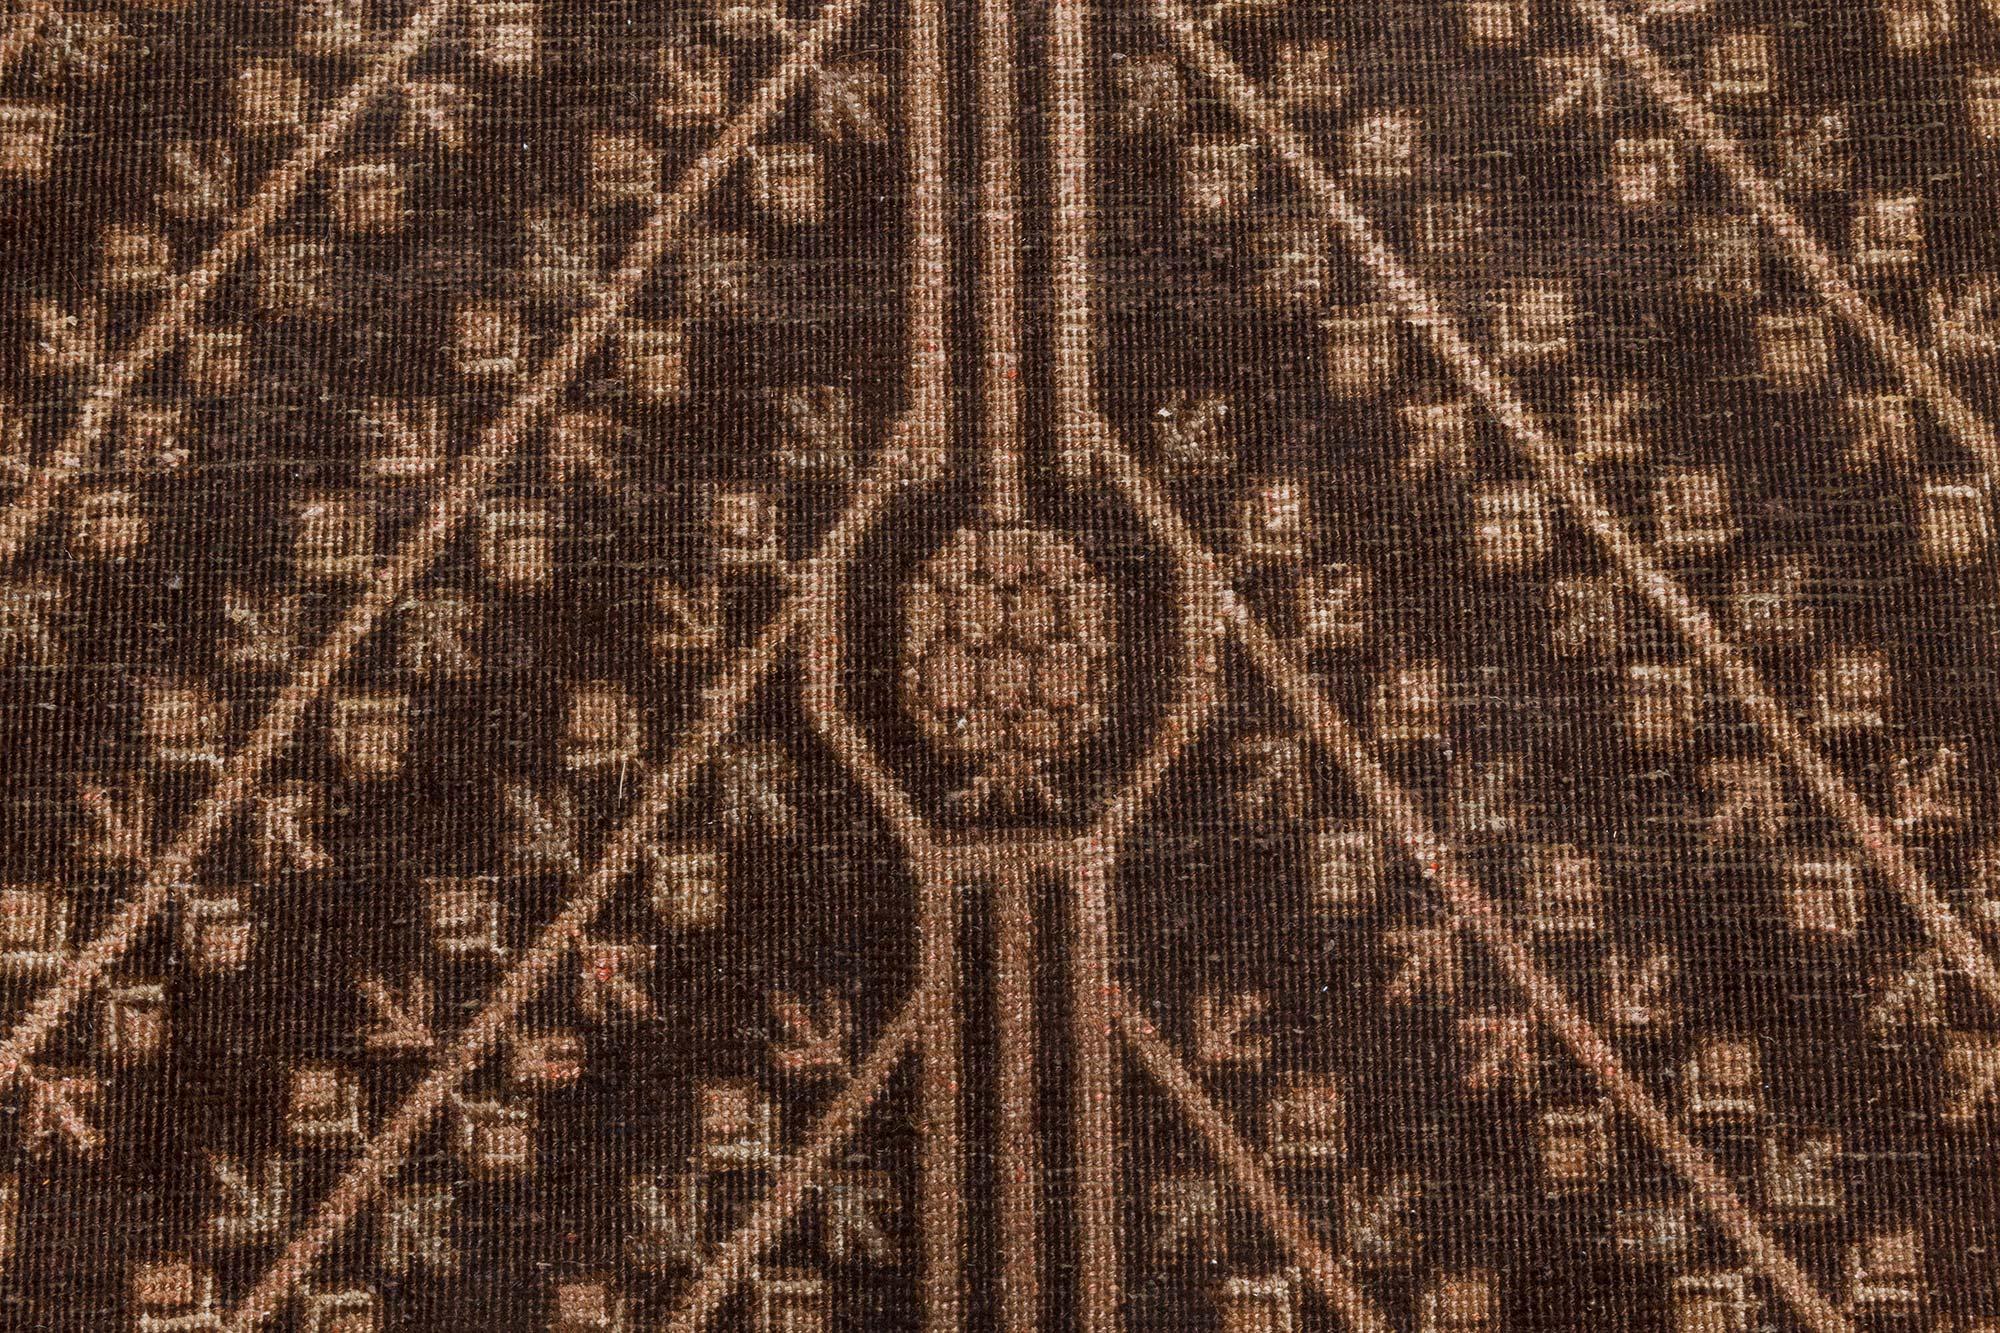 Mid-20th century Samarkand brown, beige, pink handmade wool rug.
Size: 5'10